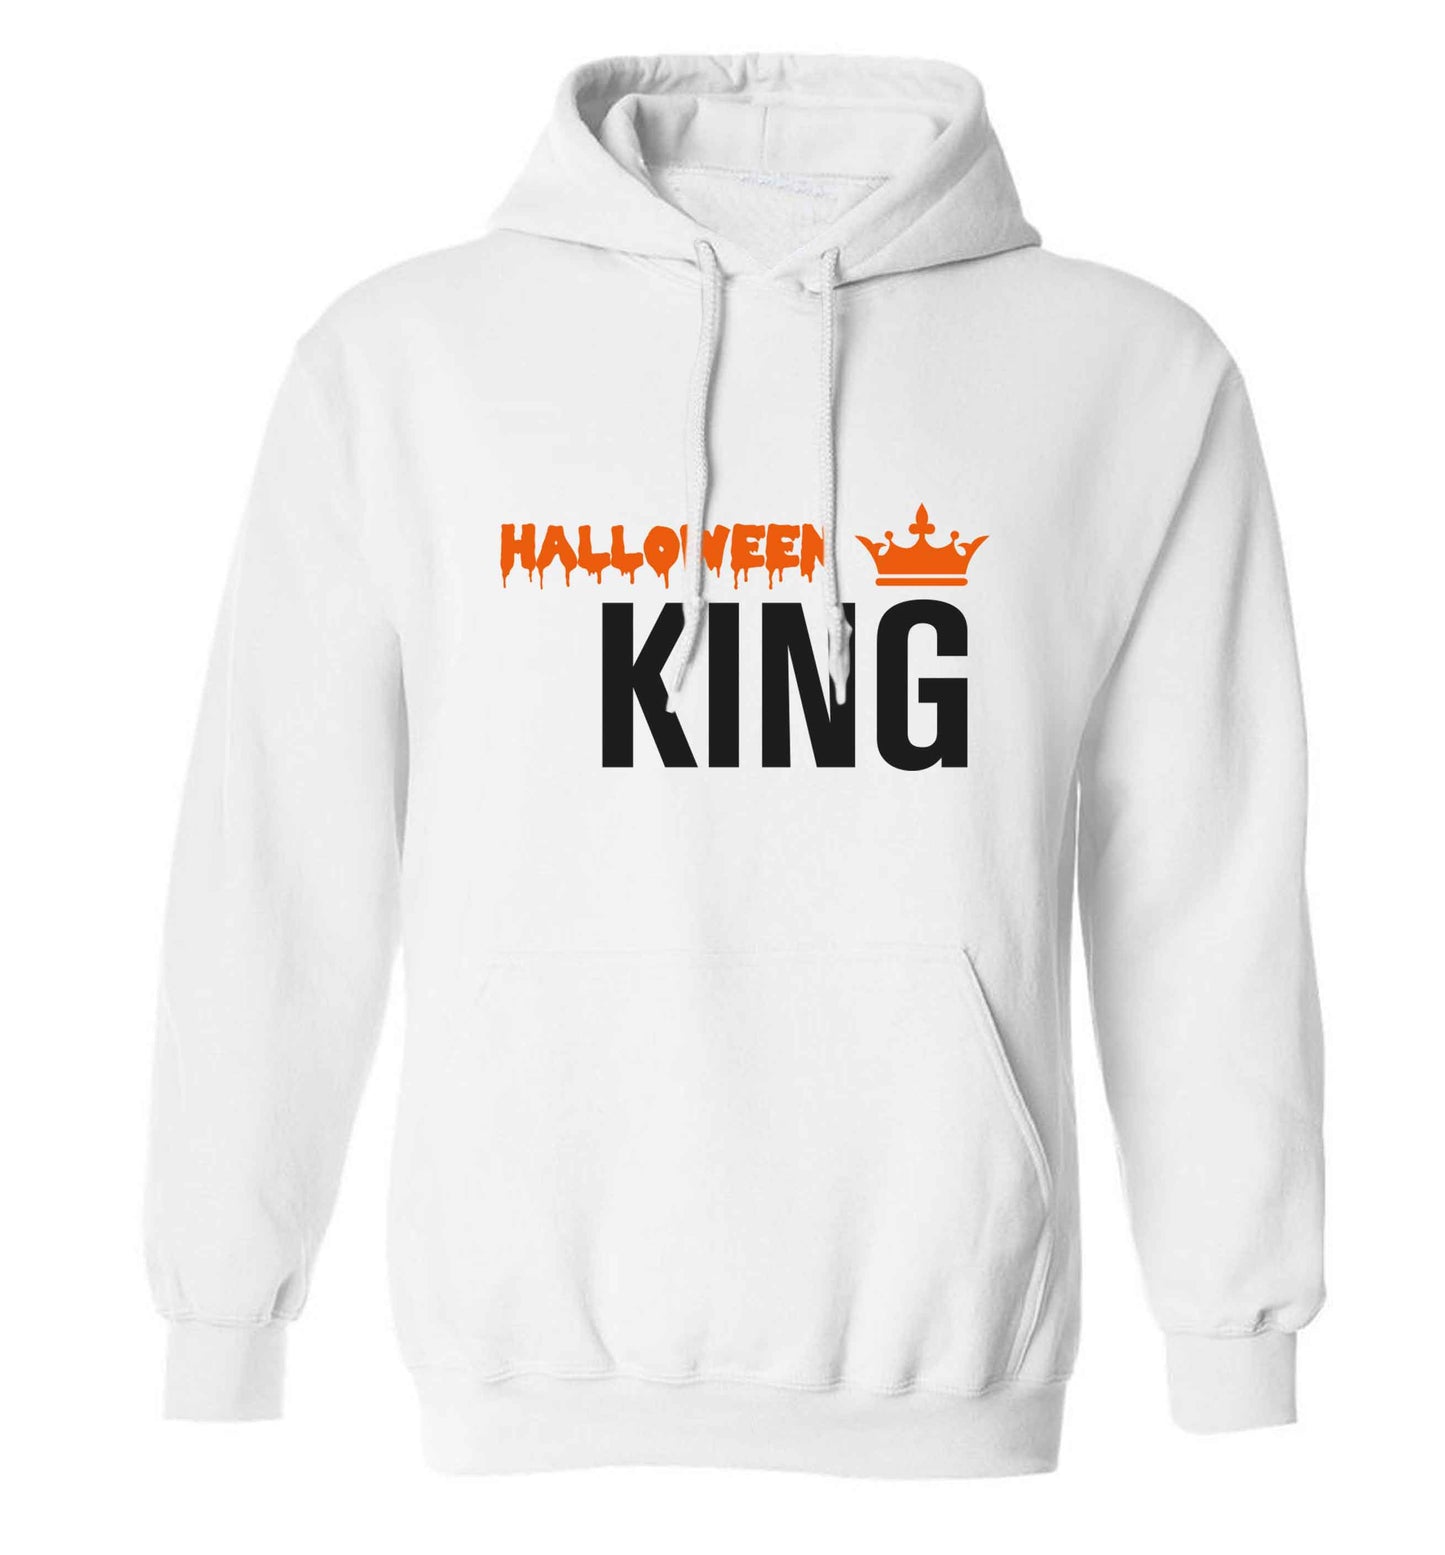 Halloween king adults unisex white hoodie 2XL